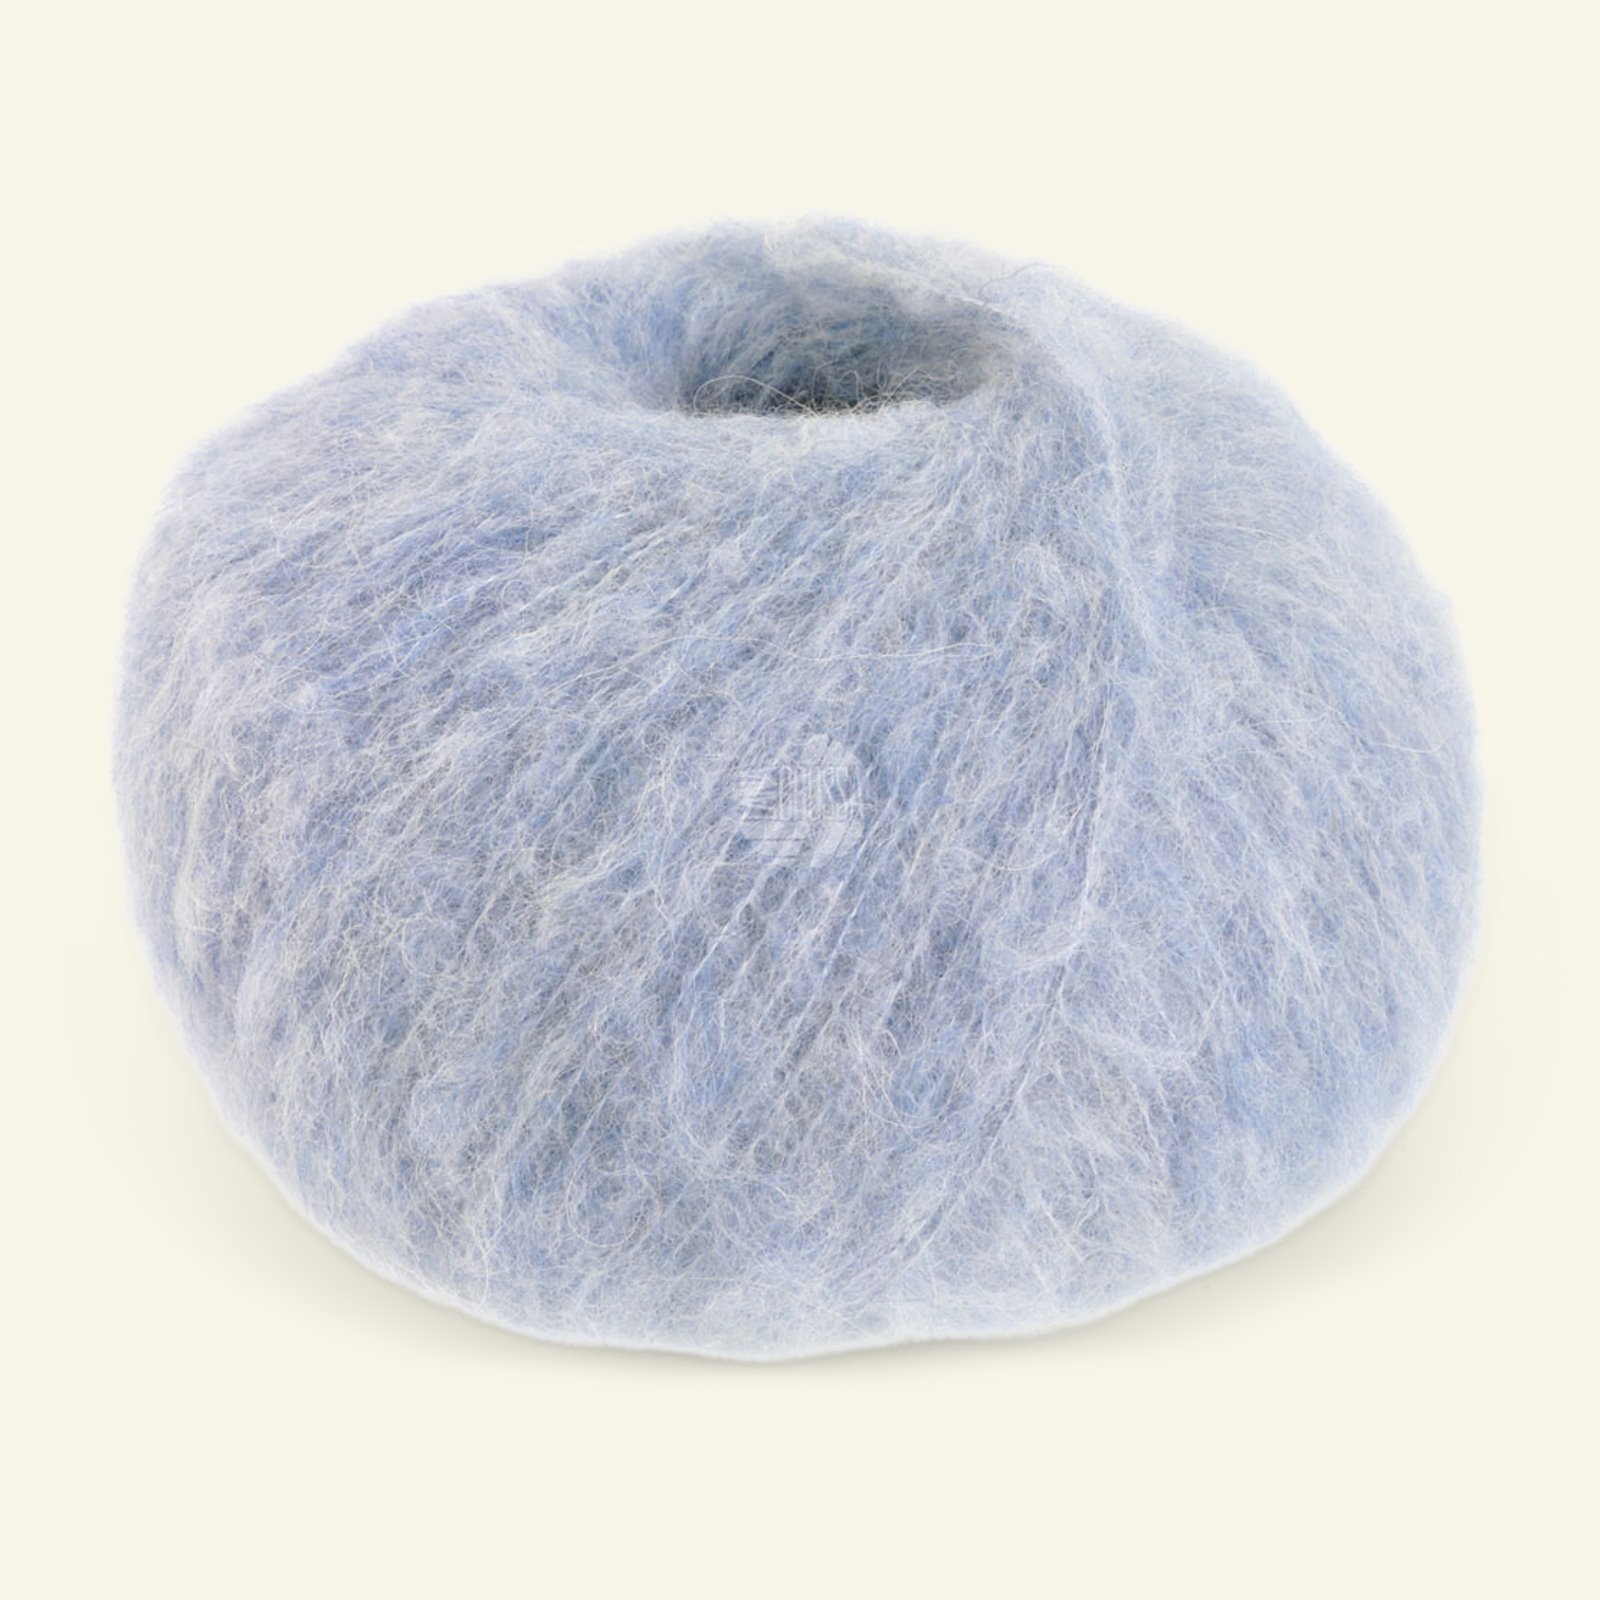 Lana Grossa, alpaca yarn Natural Alpaca Lungo, light blue